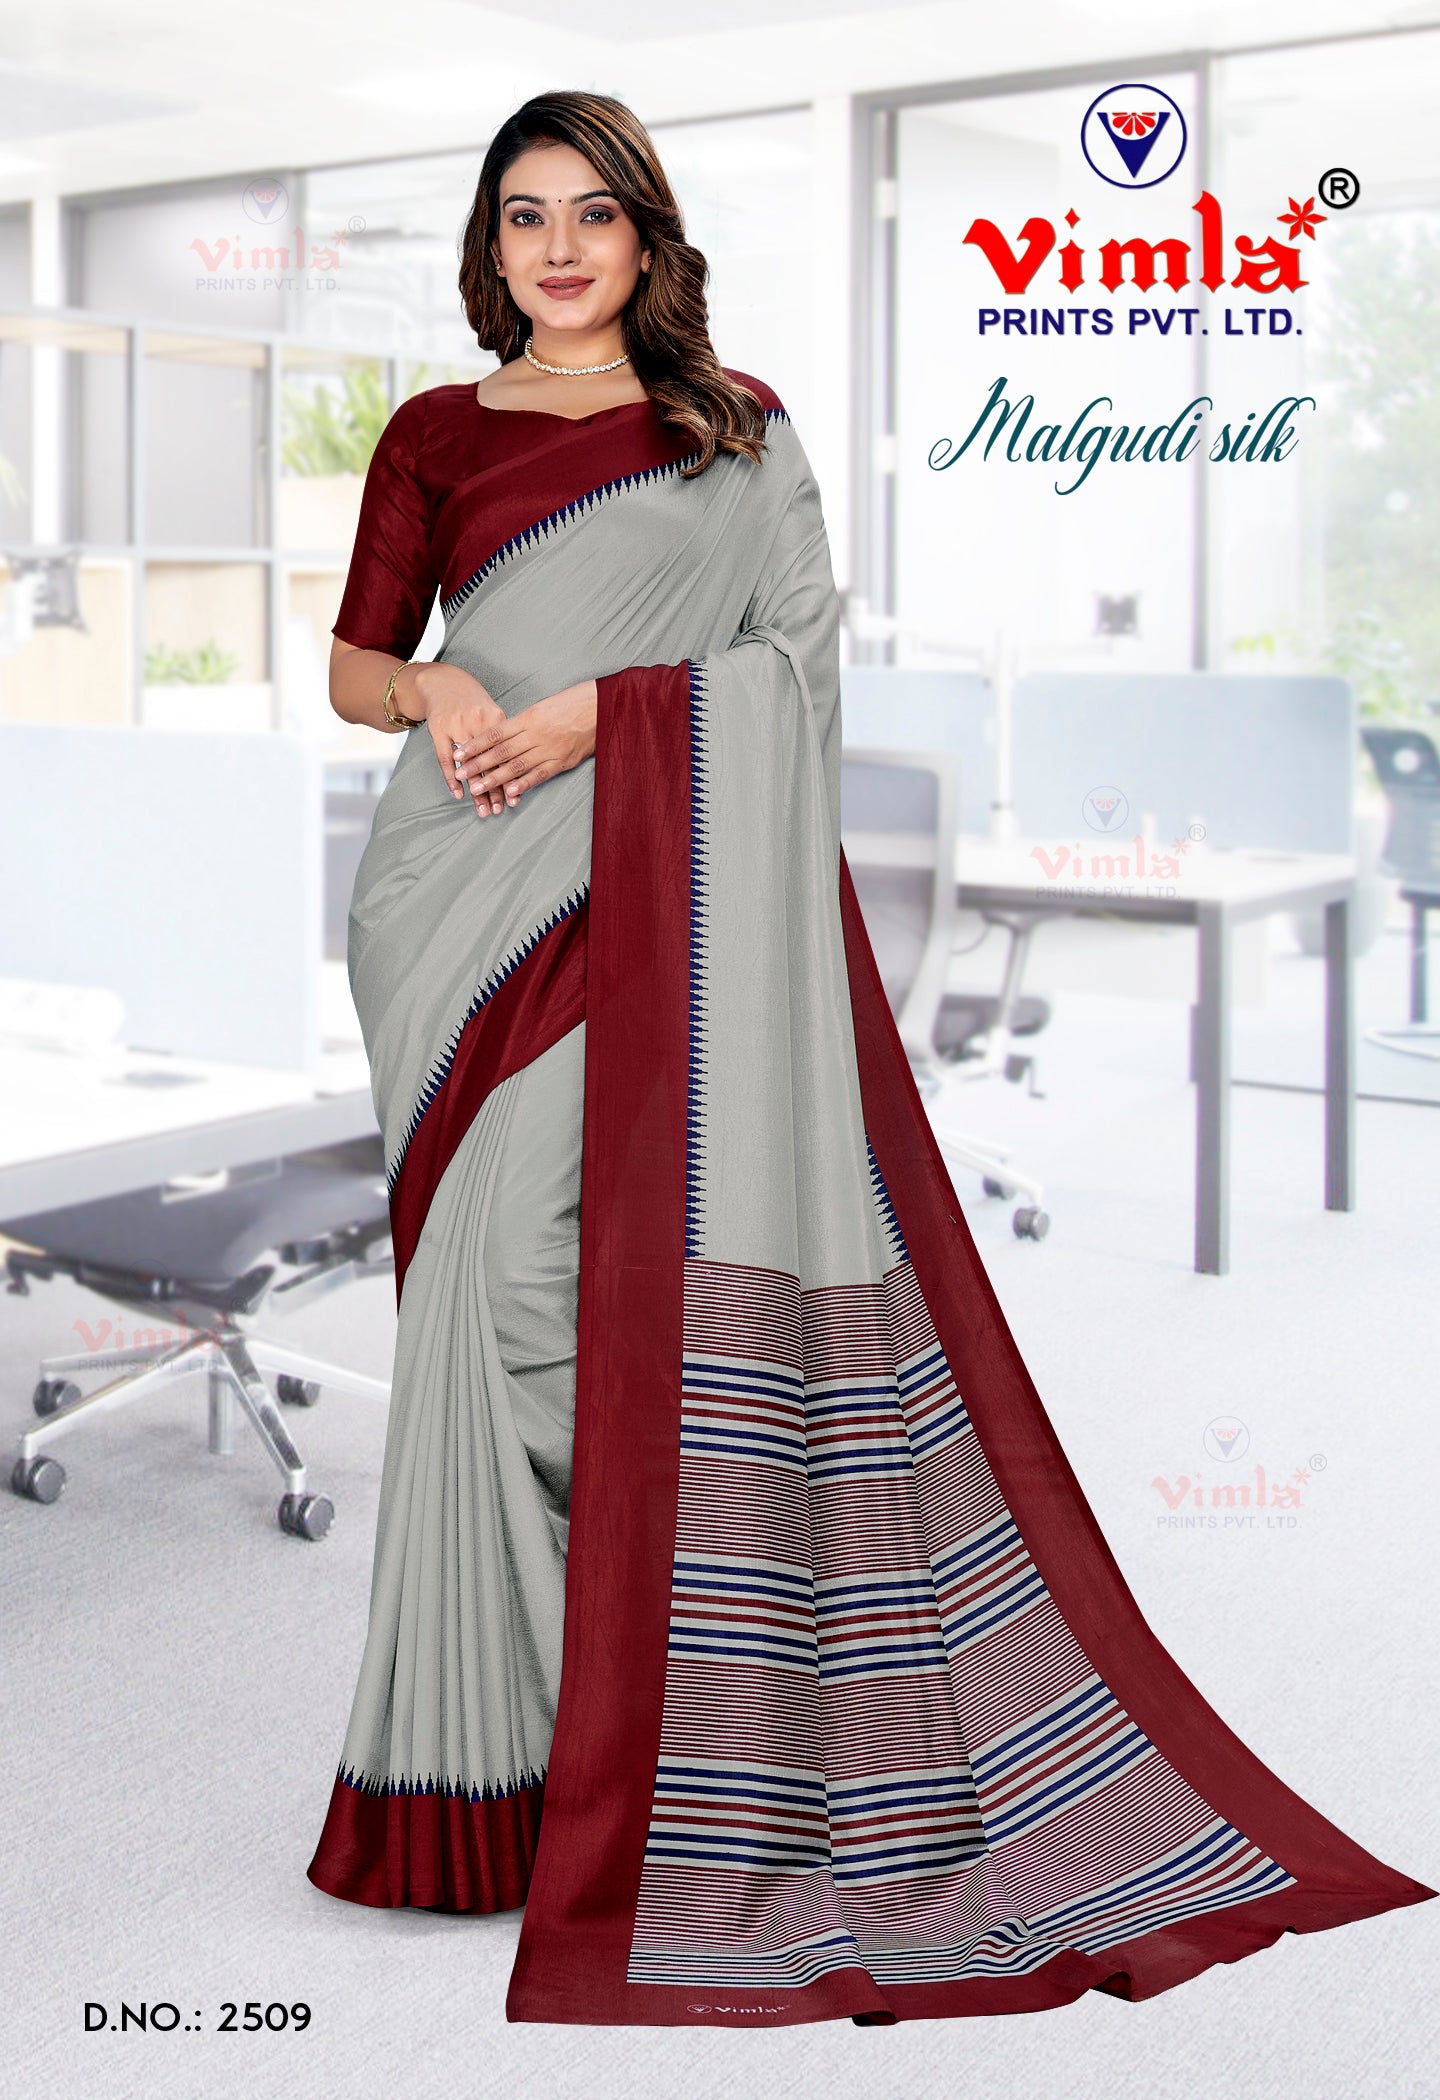 Vimla Women's Maroon Malgudi Art Silk Uniform Saree with Blouse Piece (2509_25)